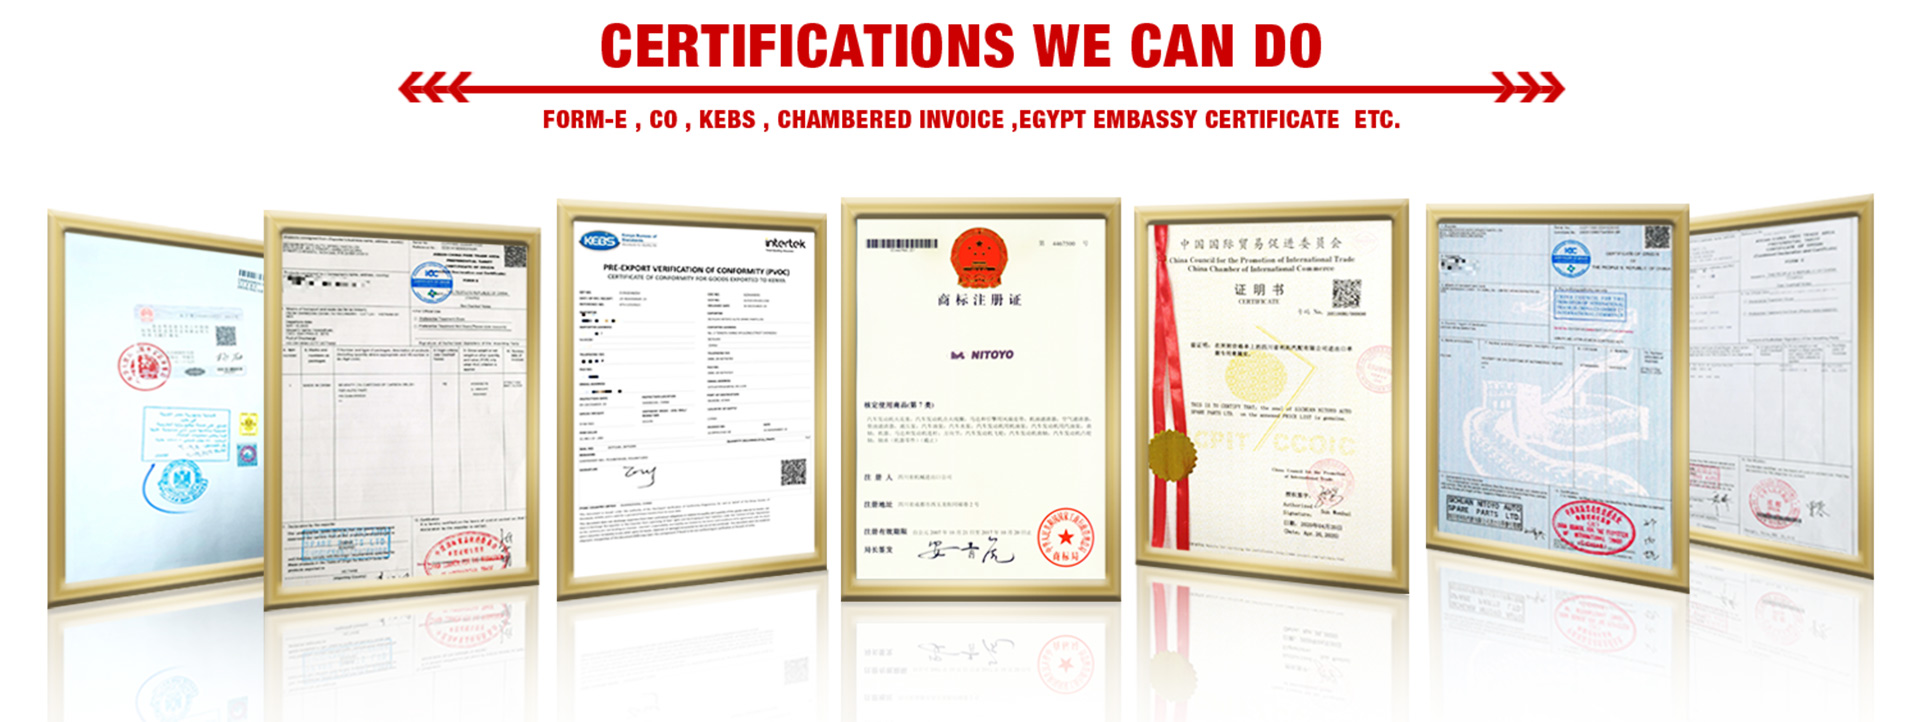 certification-banenr